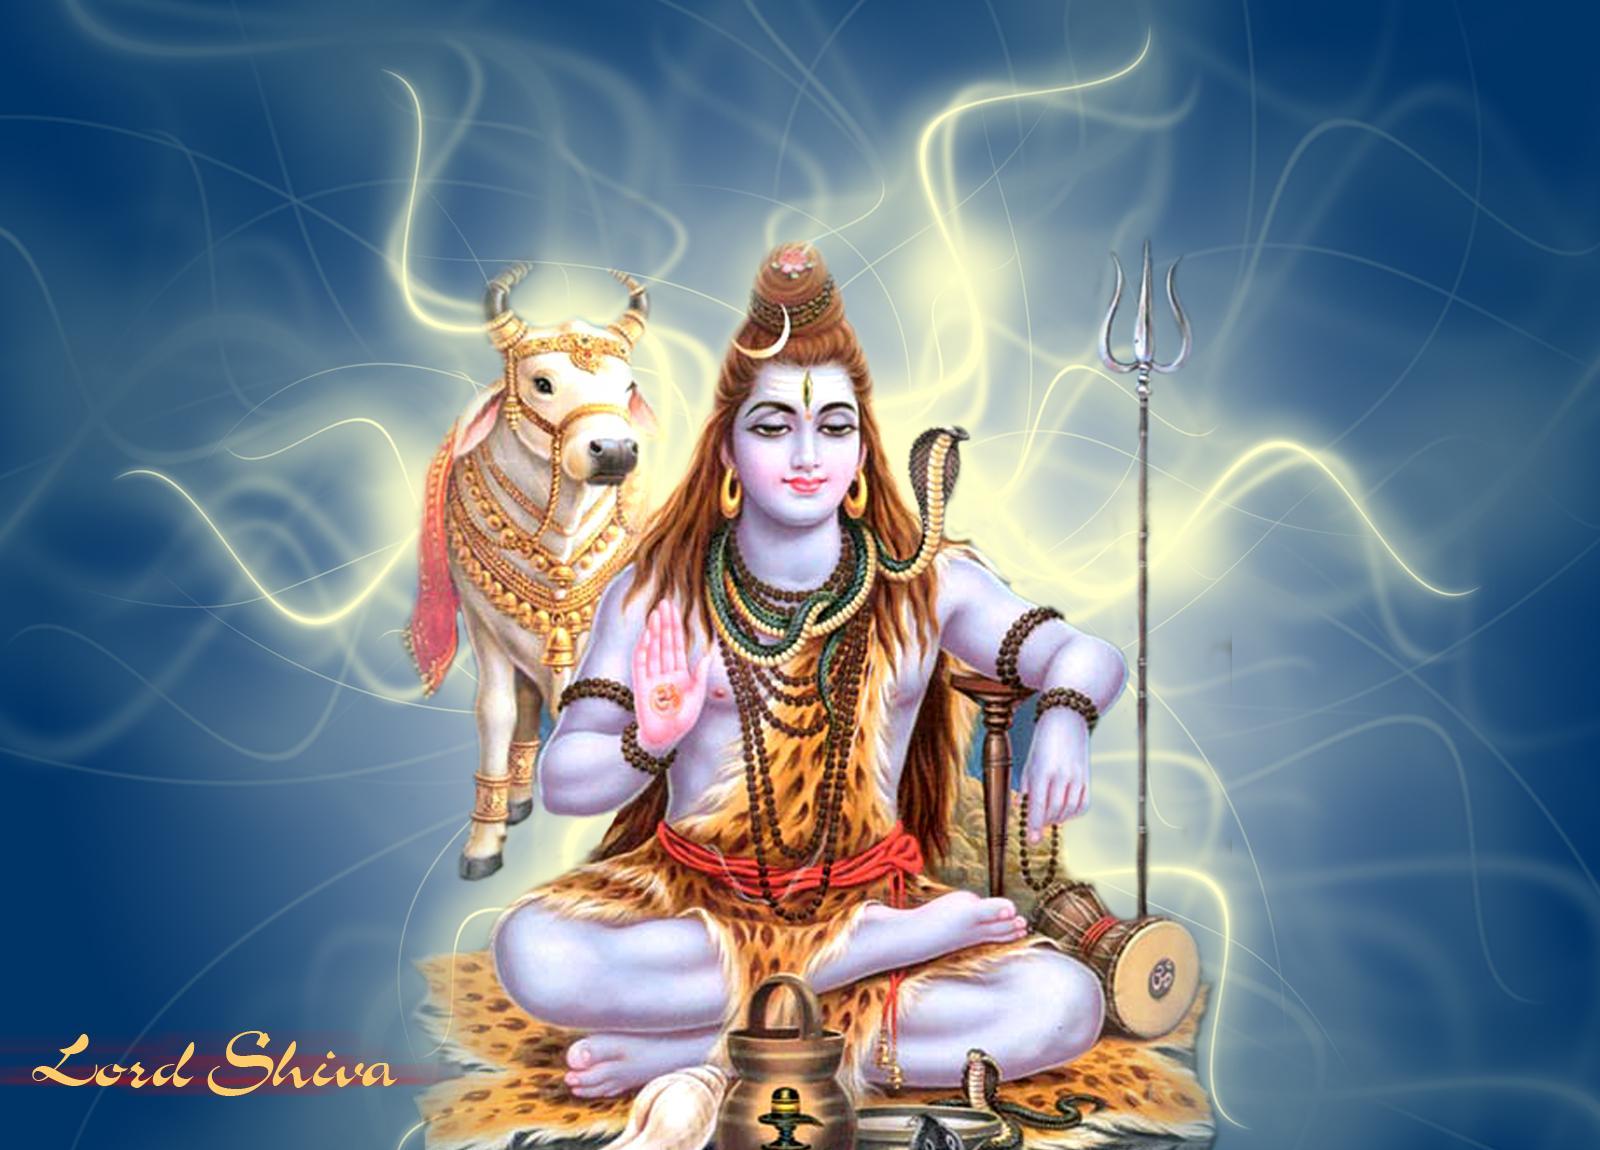 Free download Wallpapers Hindu God Shiva Wallpaper Lord Shiva Gets ...